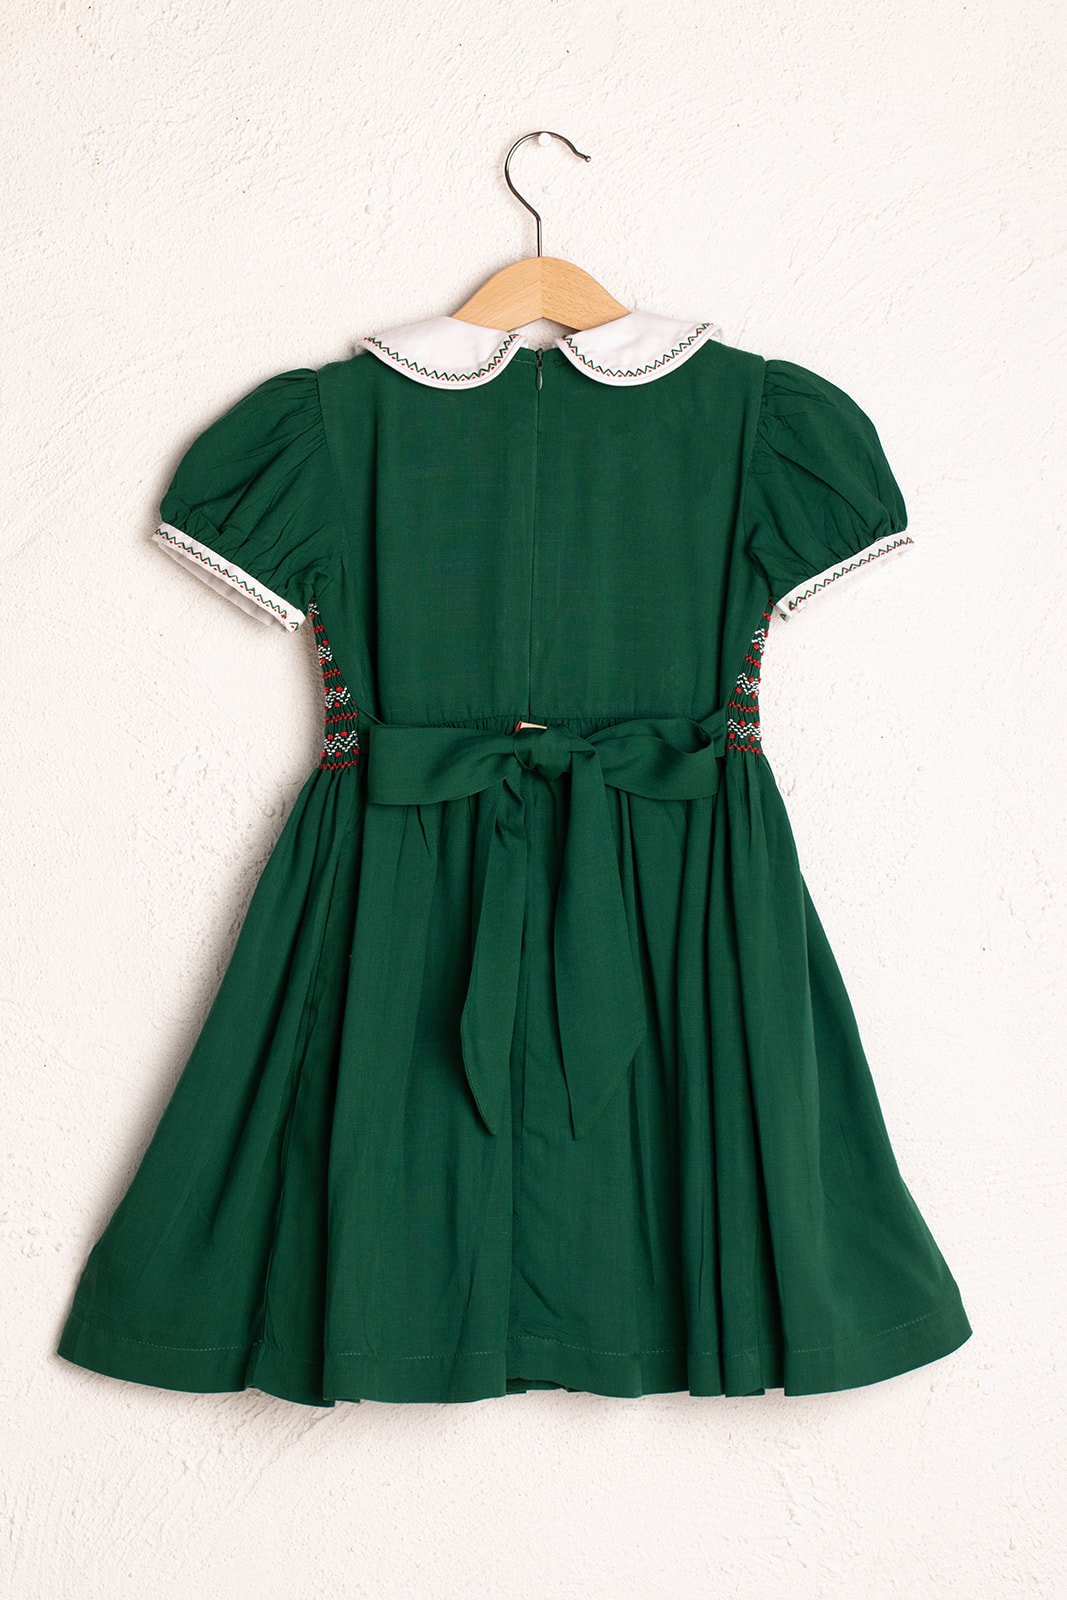 Dot & Mila Green Smocked Dress Size 5